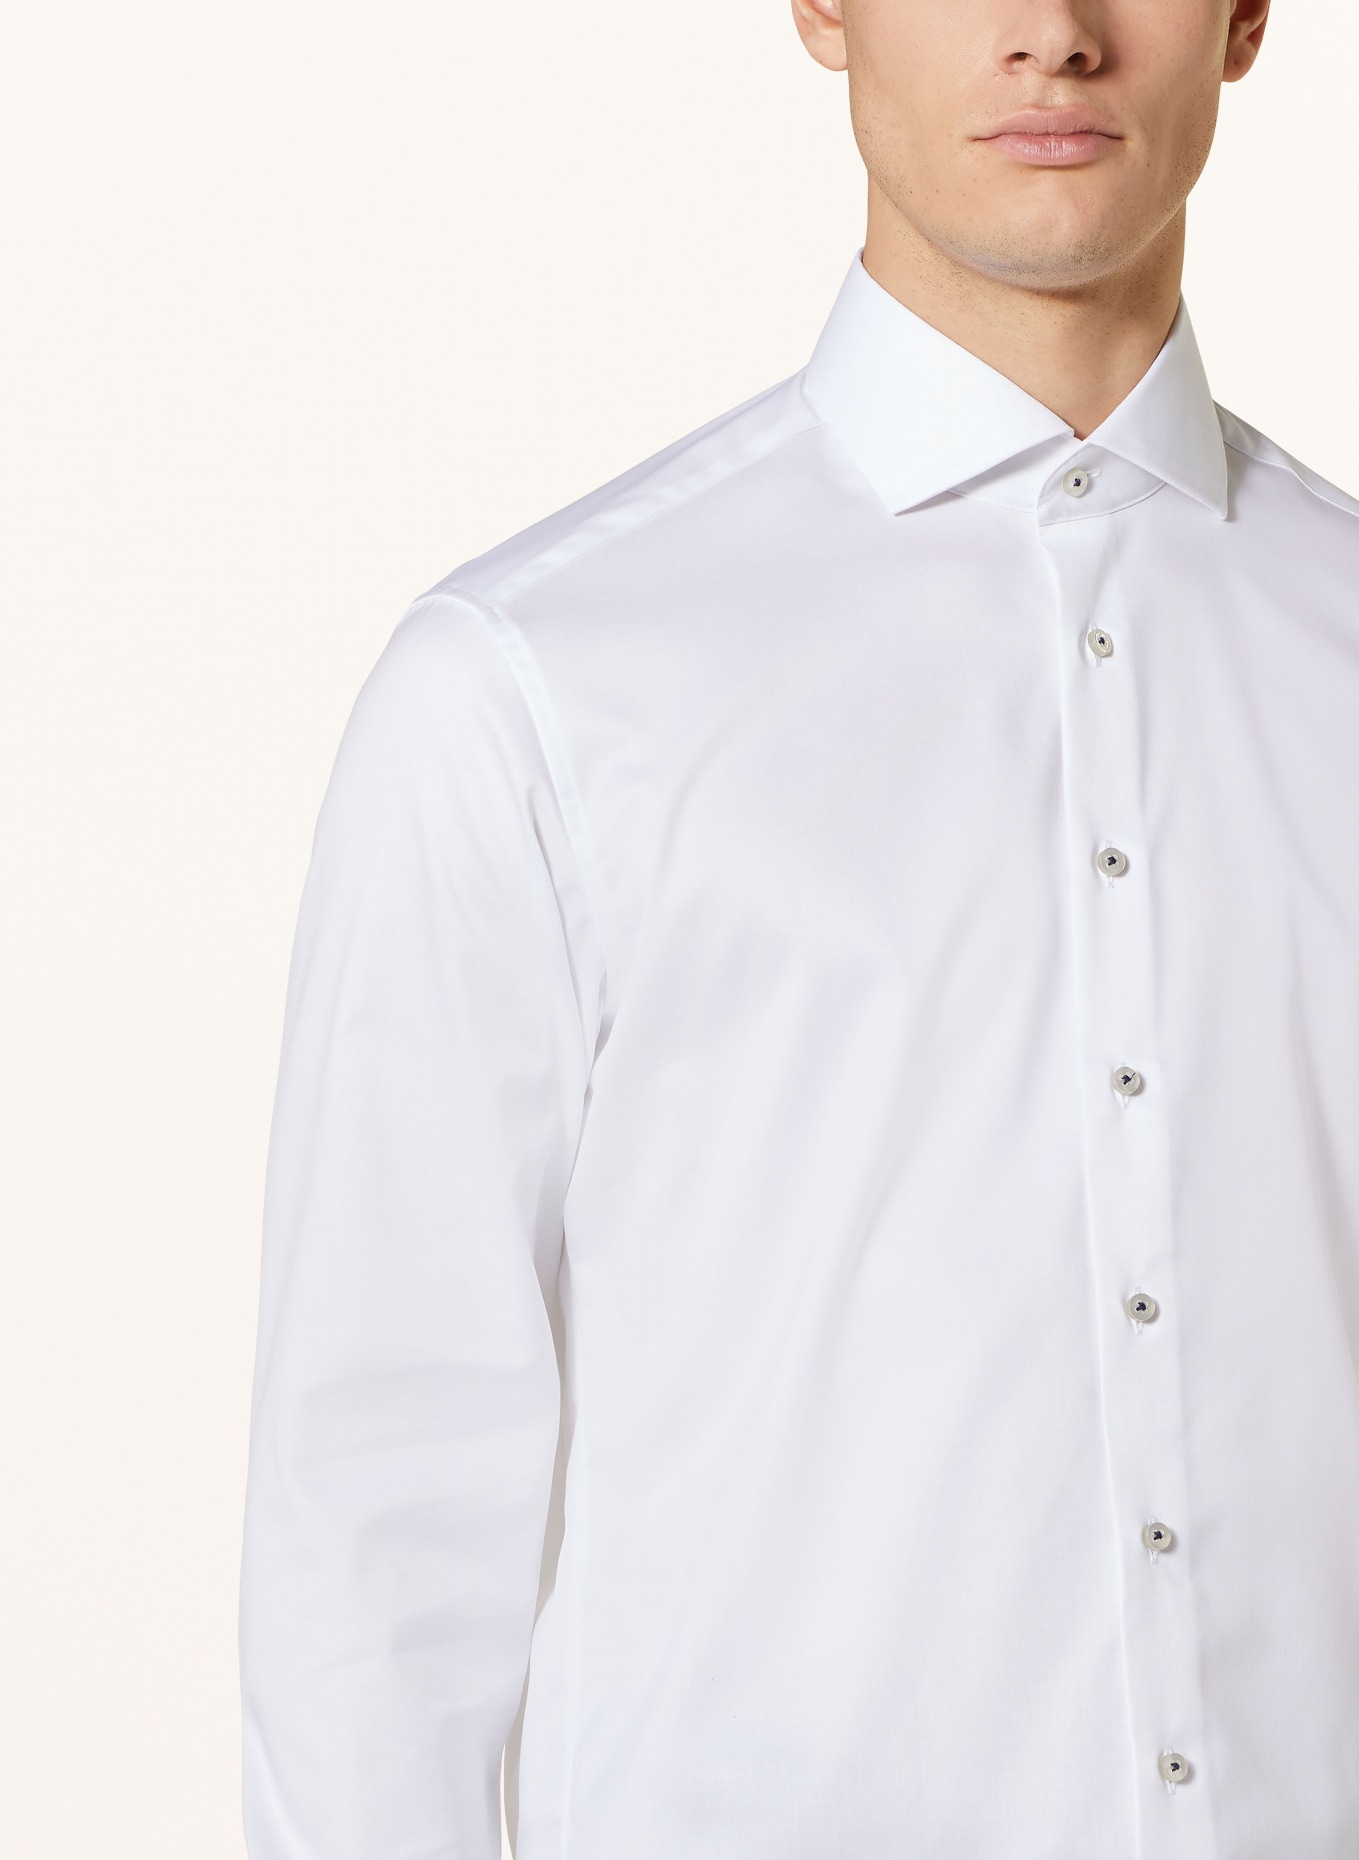 1863 ETERNA modern white Shirt fit in